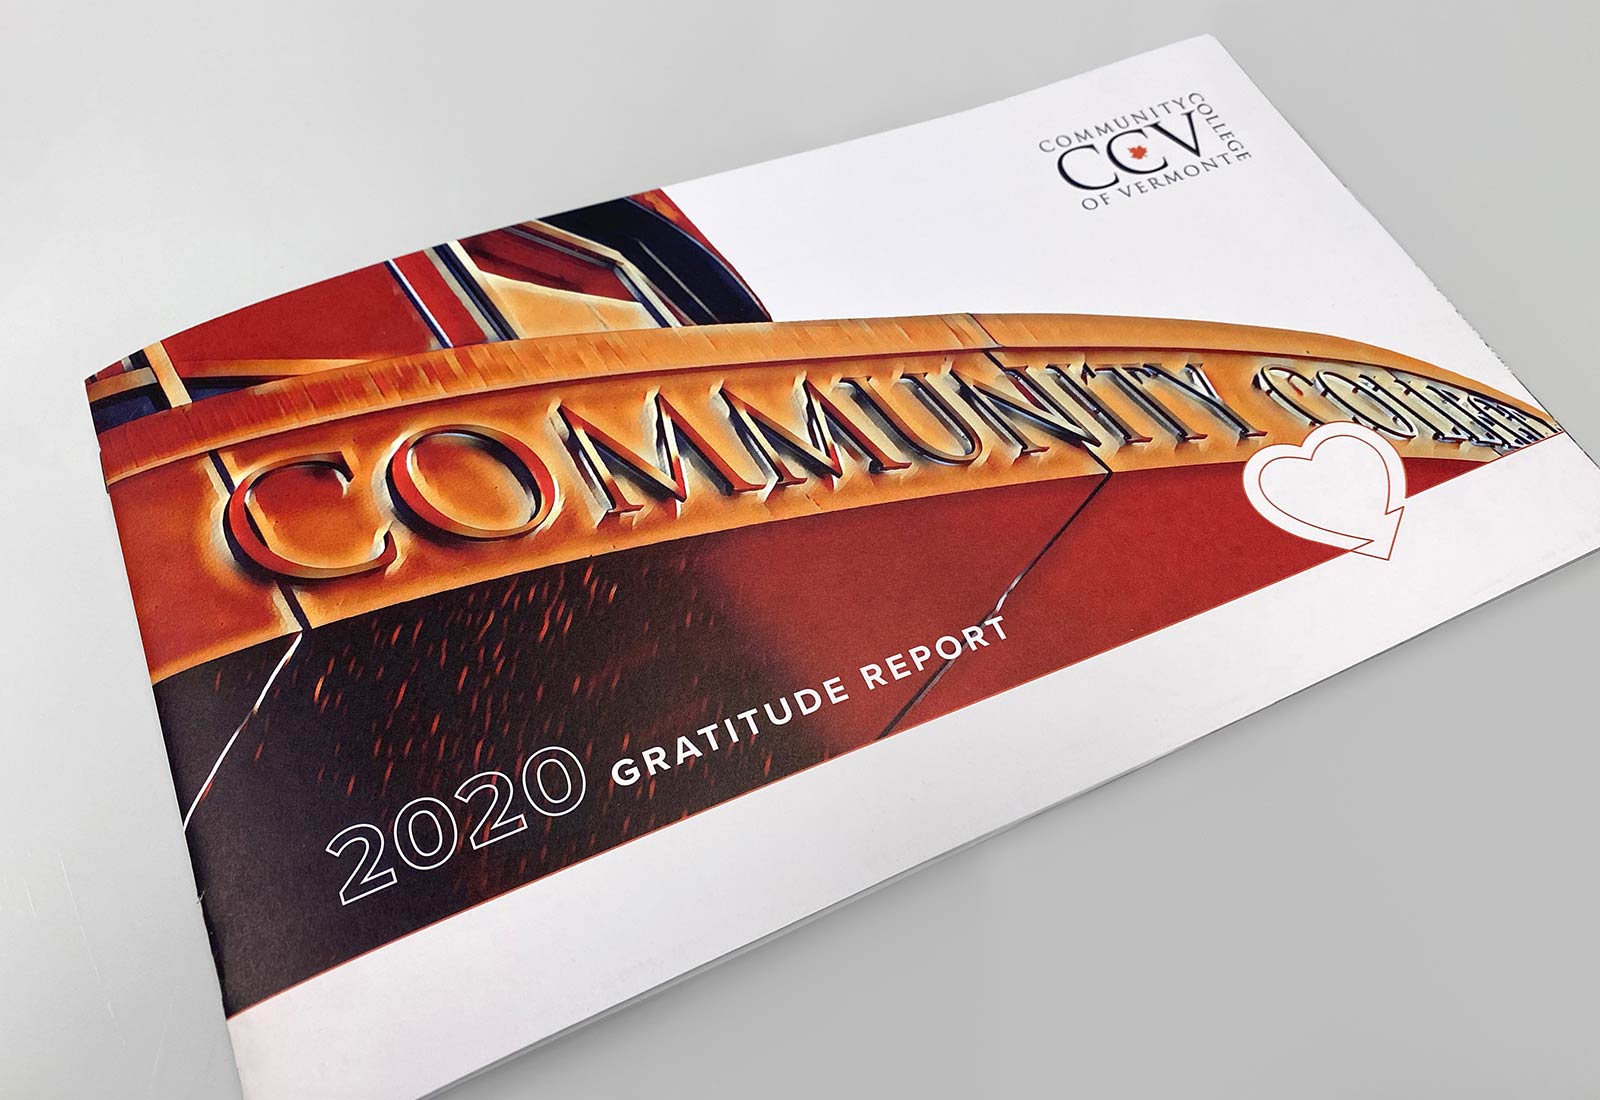 Community College of Vermont cover of 2020 gratitude report